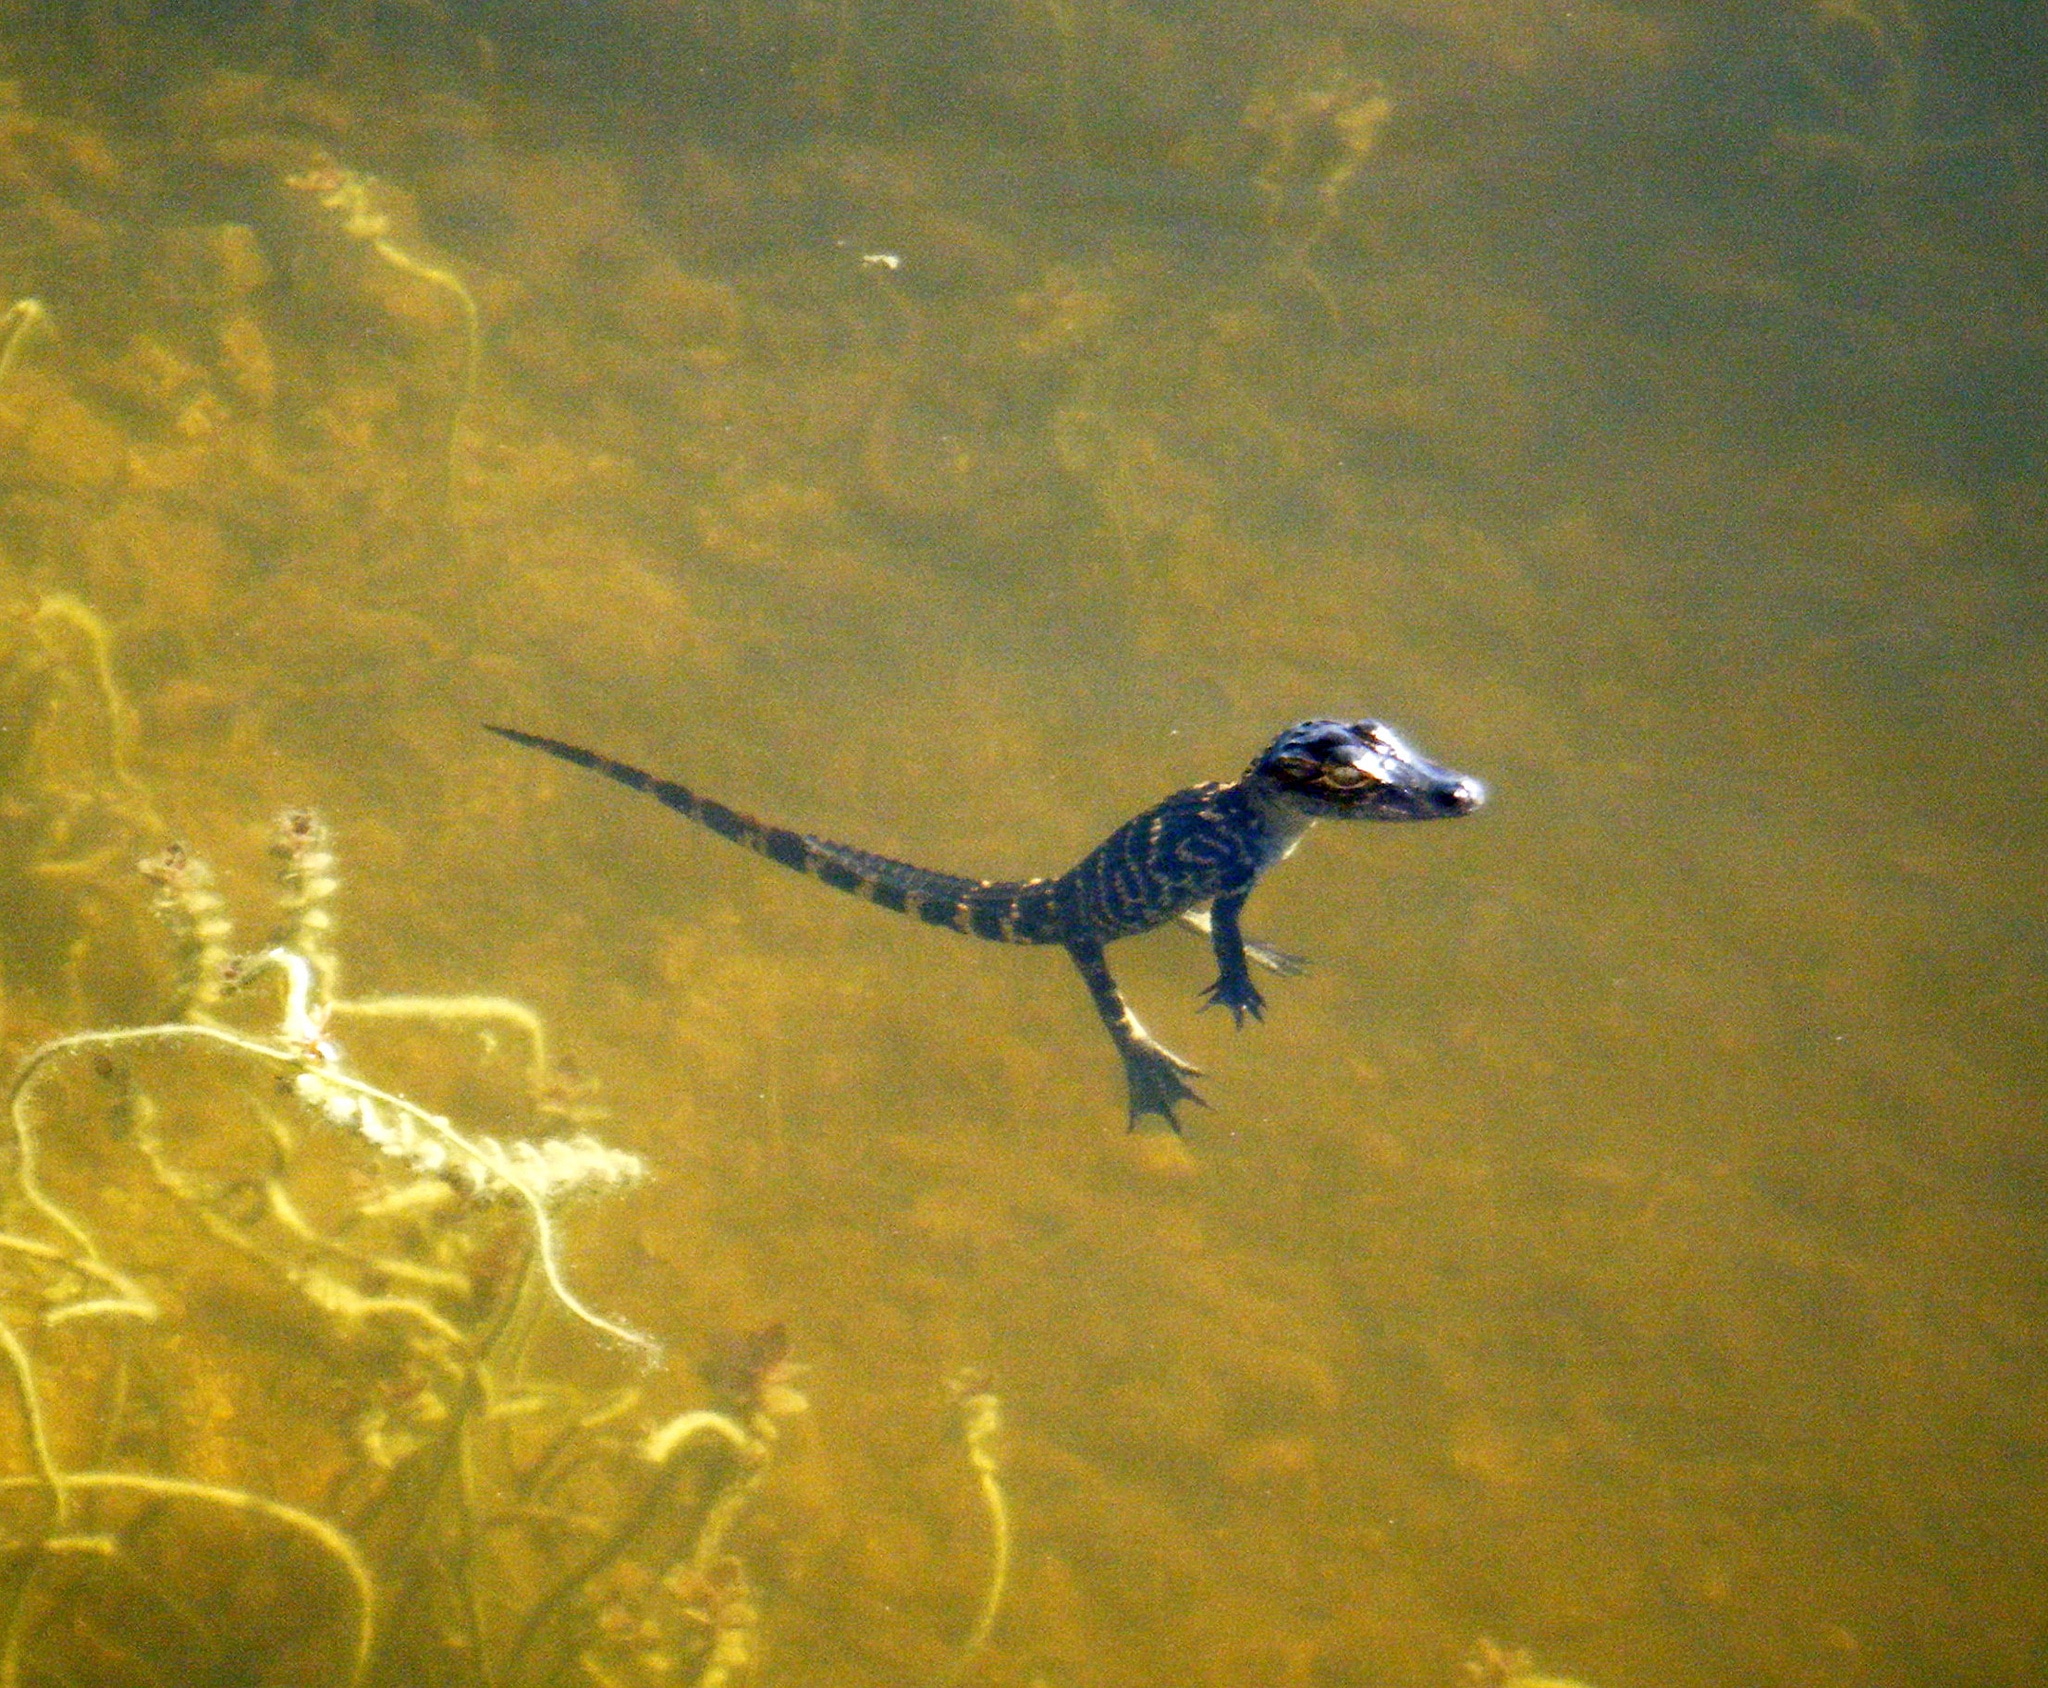 alligator d'amerique bebe, petit jeune reptile carnivore, crocodile - Instinct animal